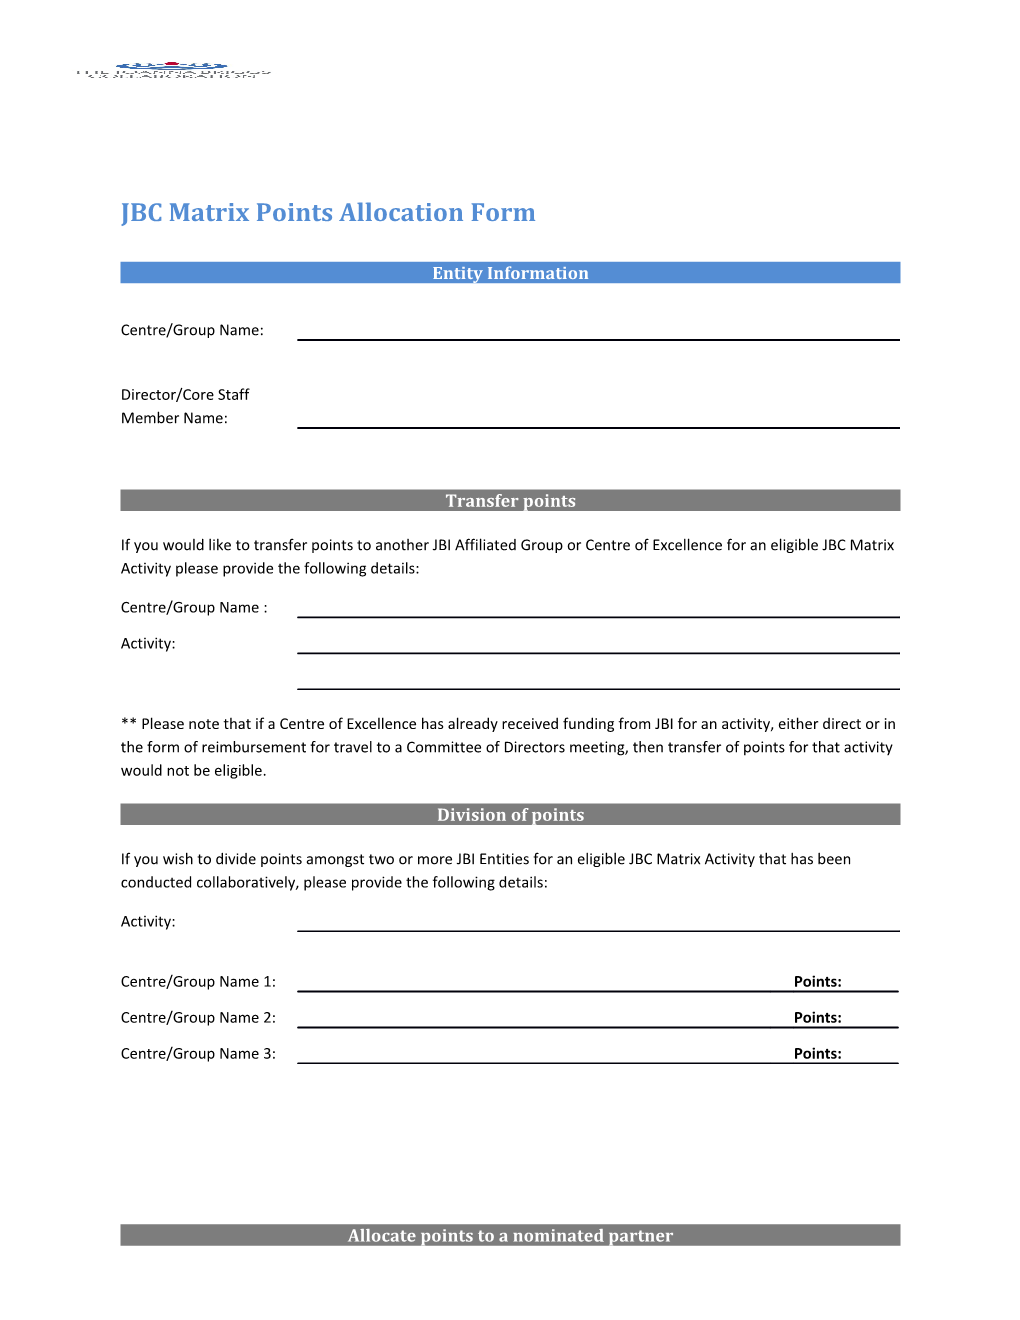 JBC Matrix Points Allocation Form